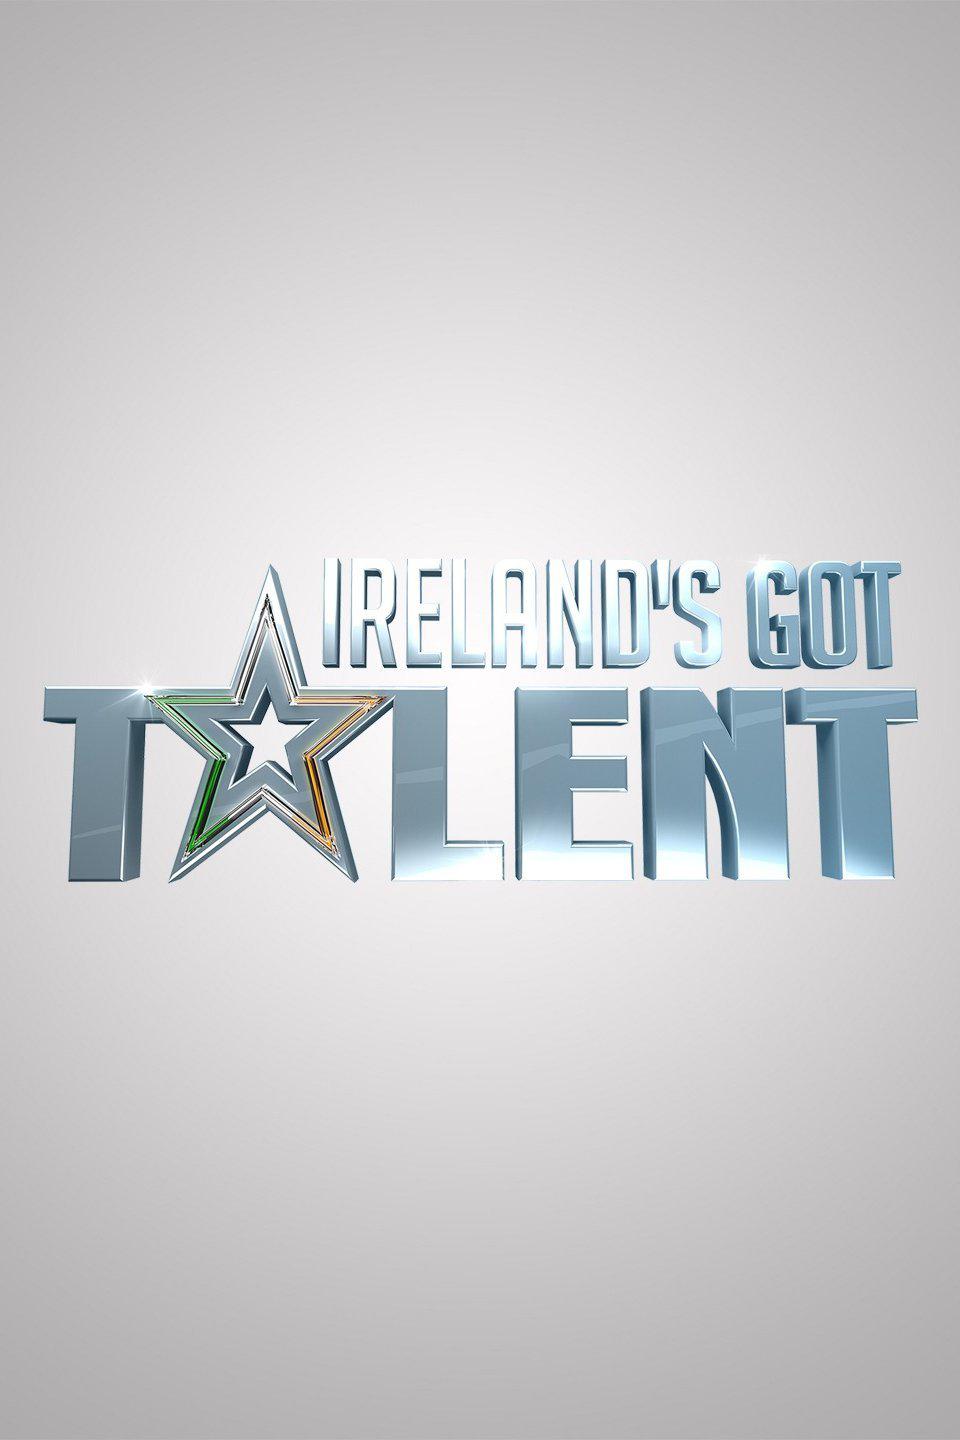 TV ratings for Ireland's Got Talent in Noruega. TV3 TV series